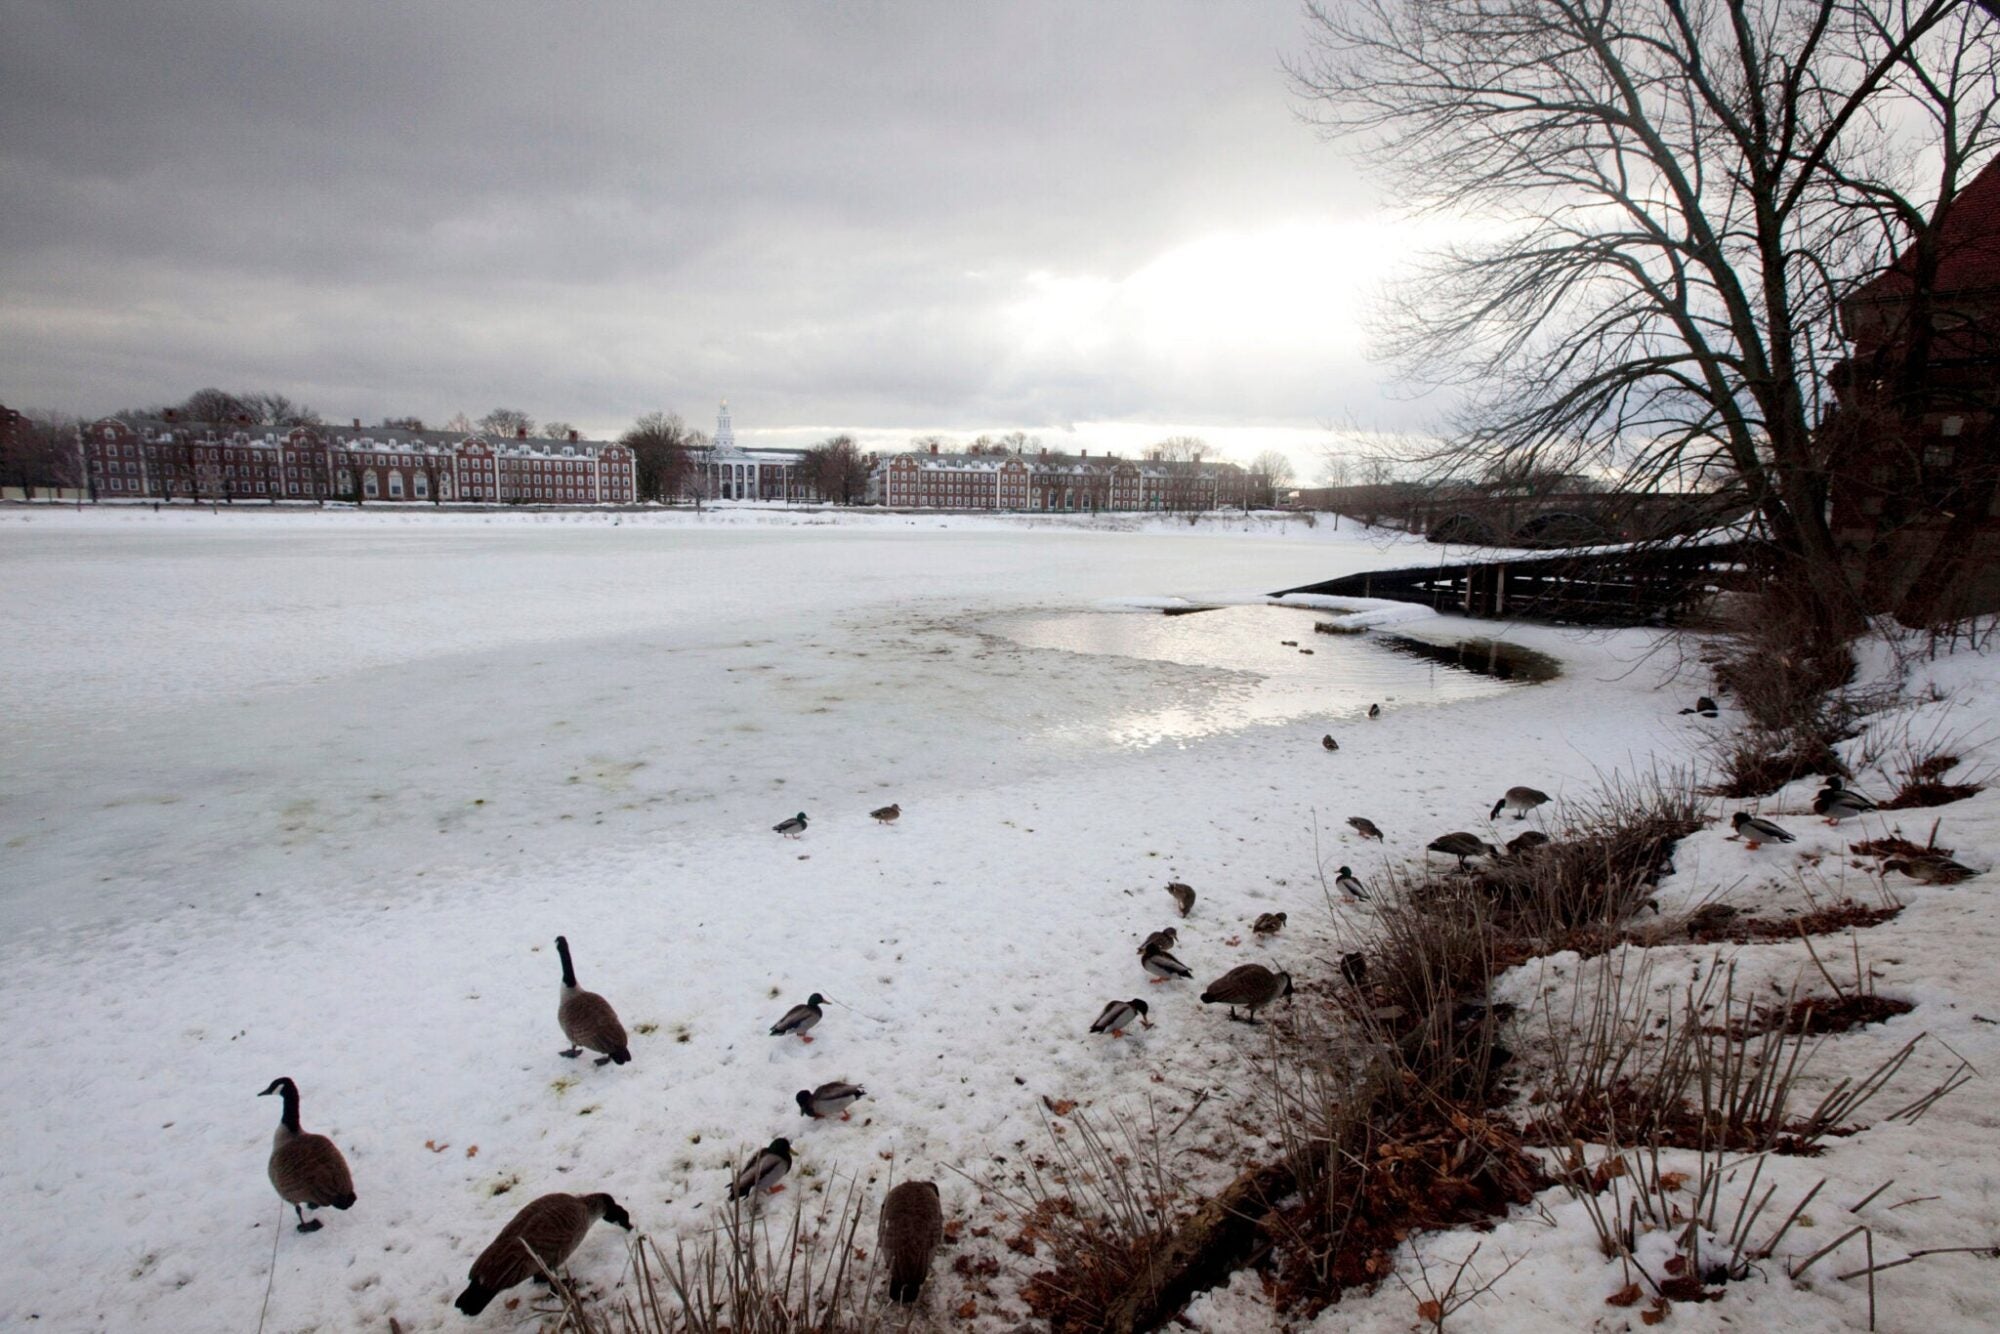 Ducks walking along a frozen Charles River